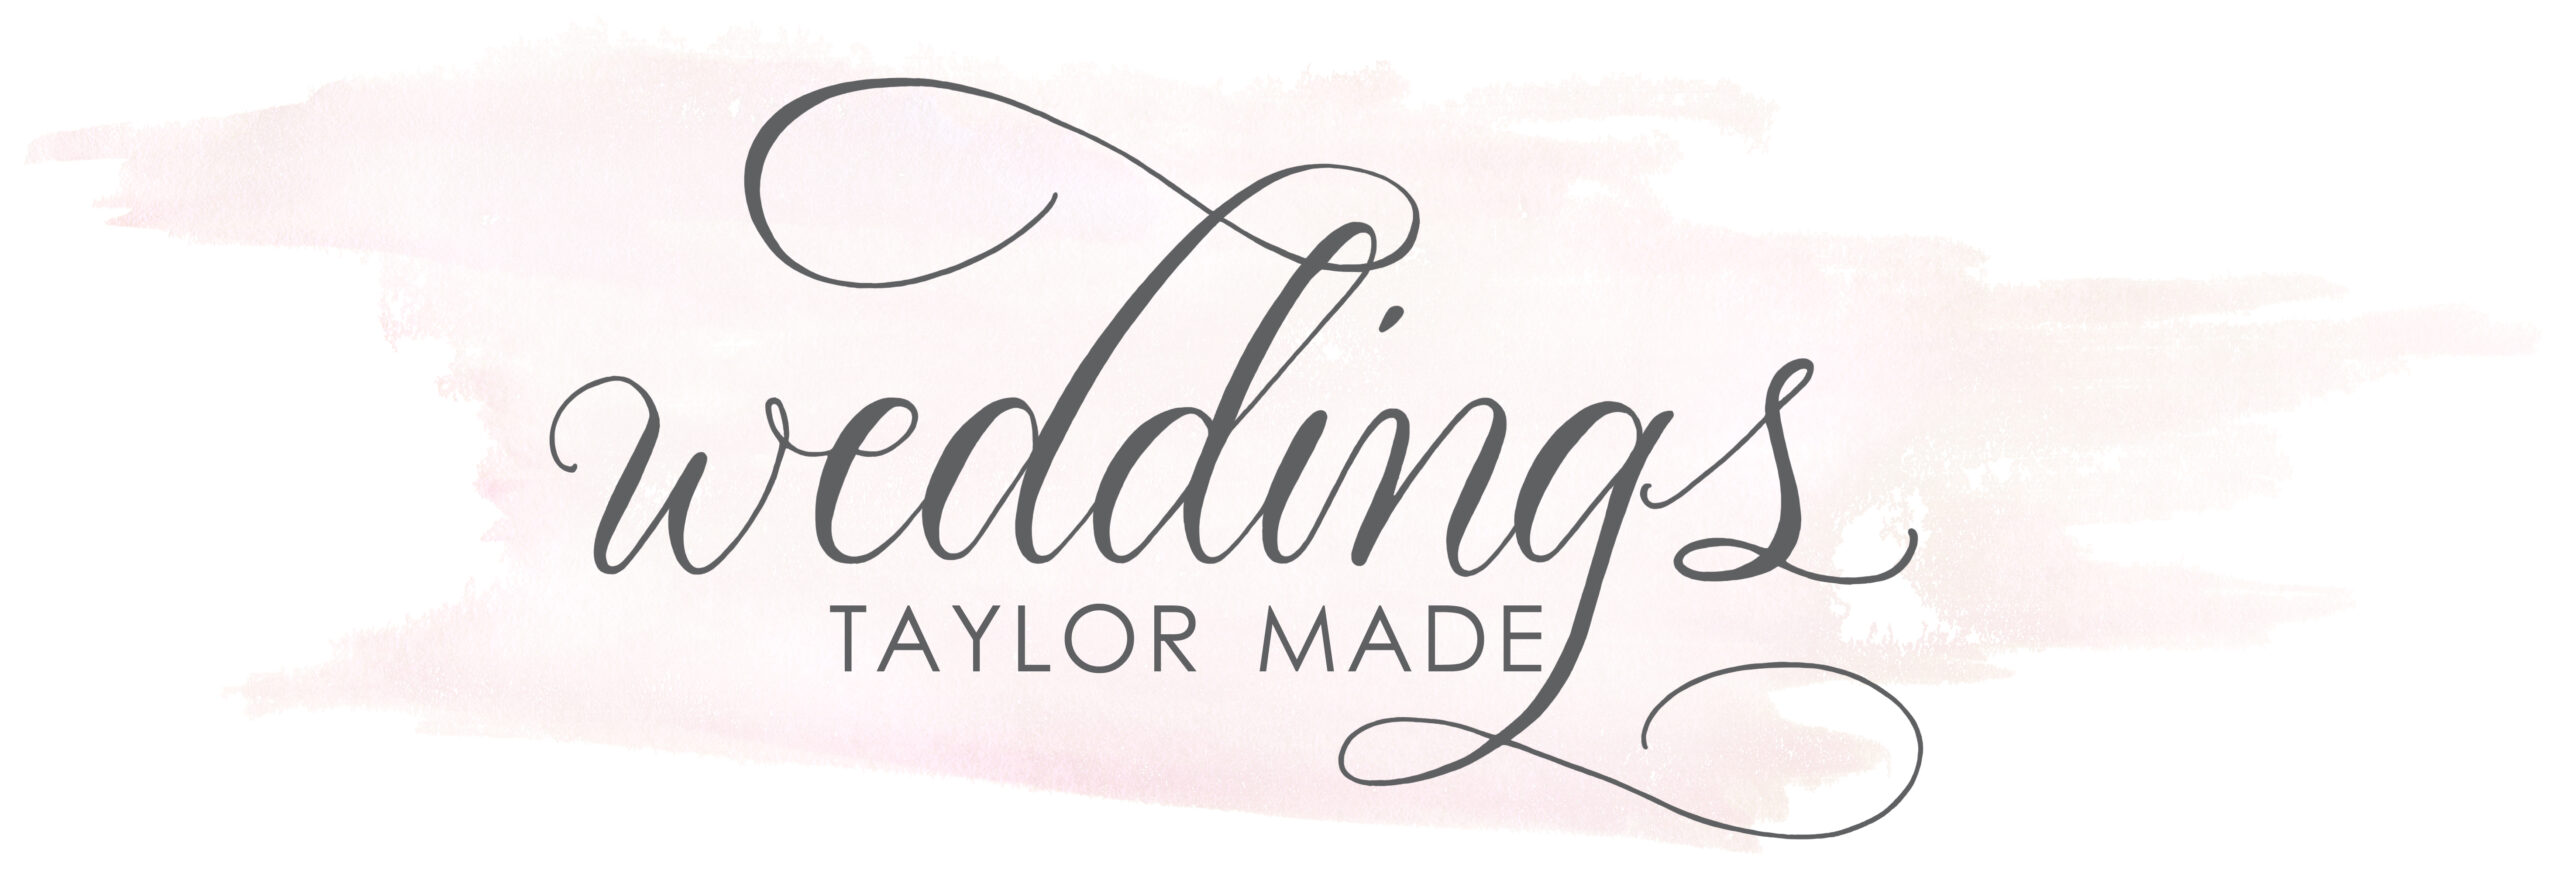 Weddings Taylor Made